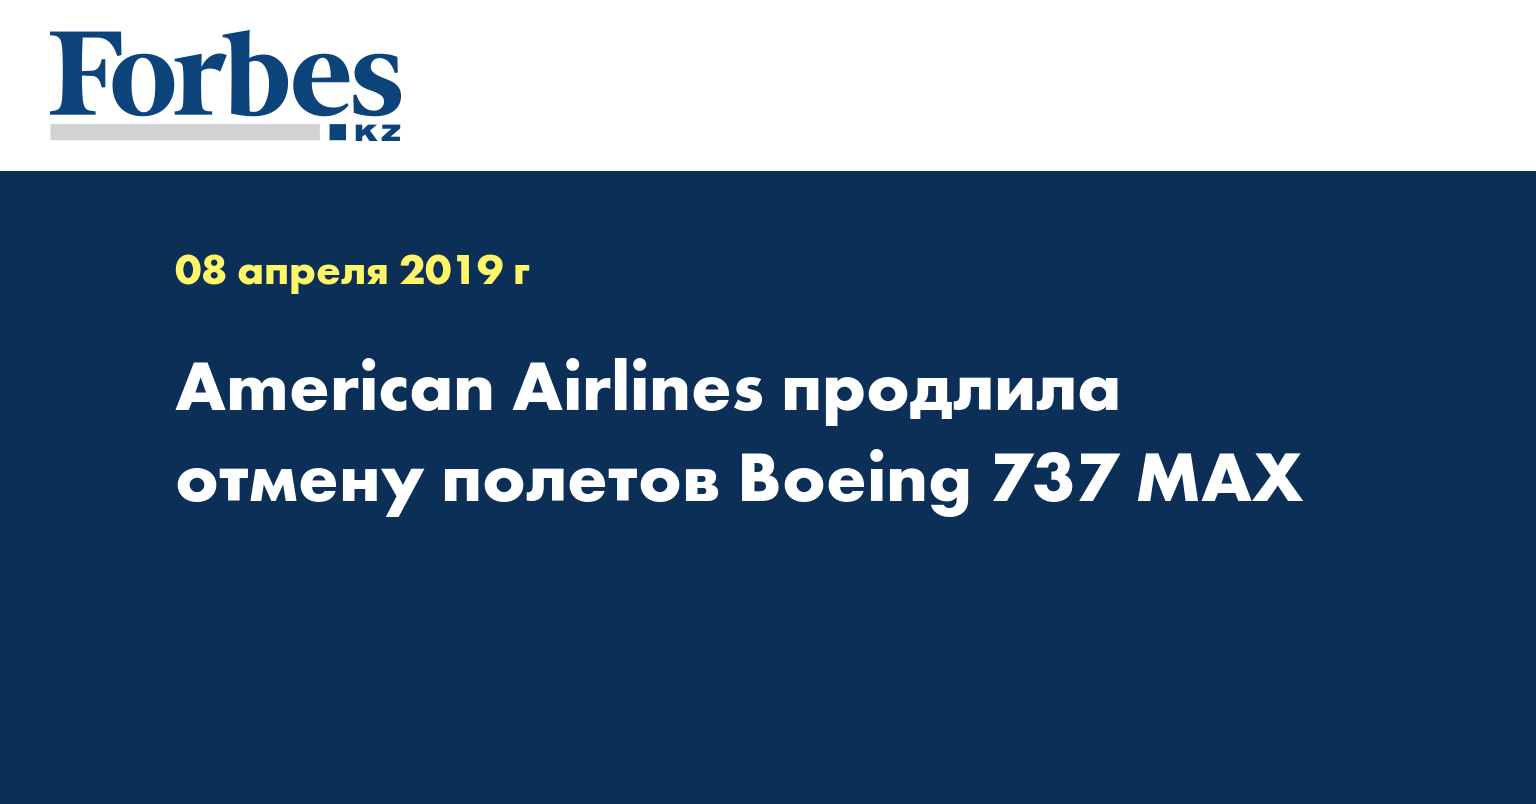 American Airlines продлила отмену полетов Boeing 737 MAX